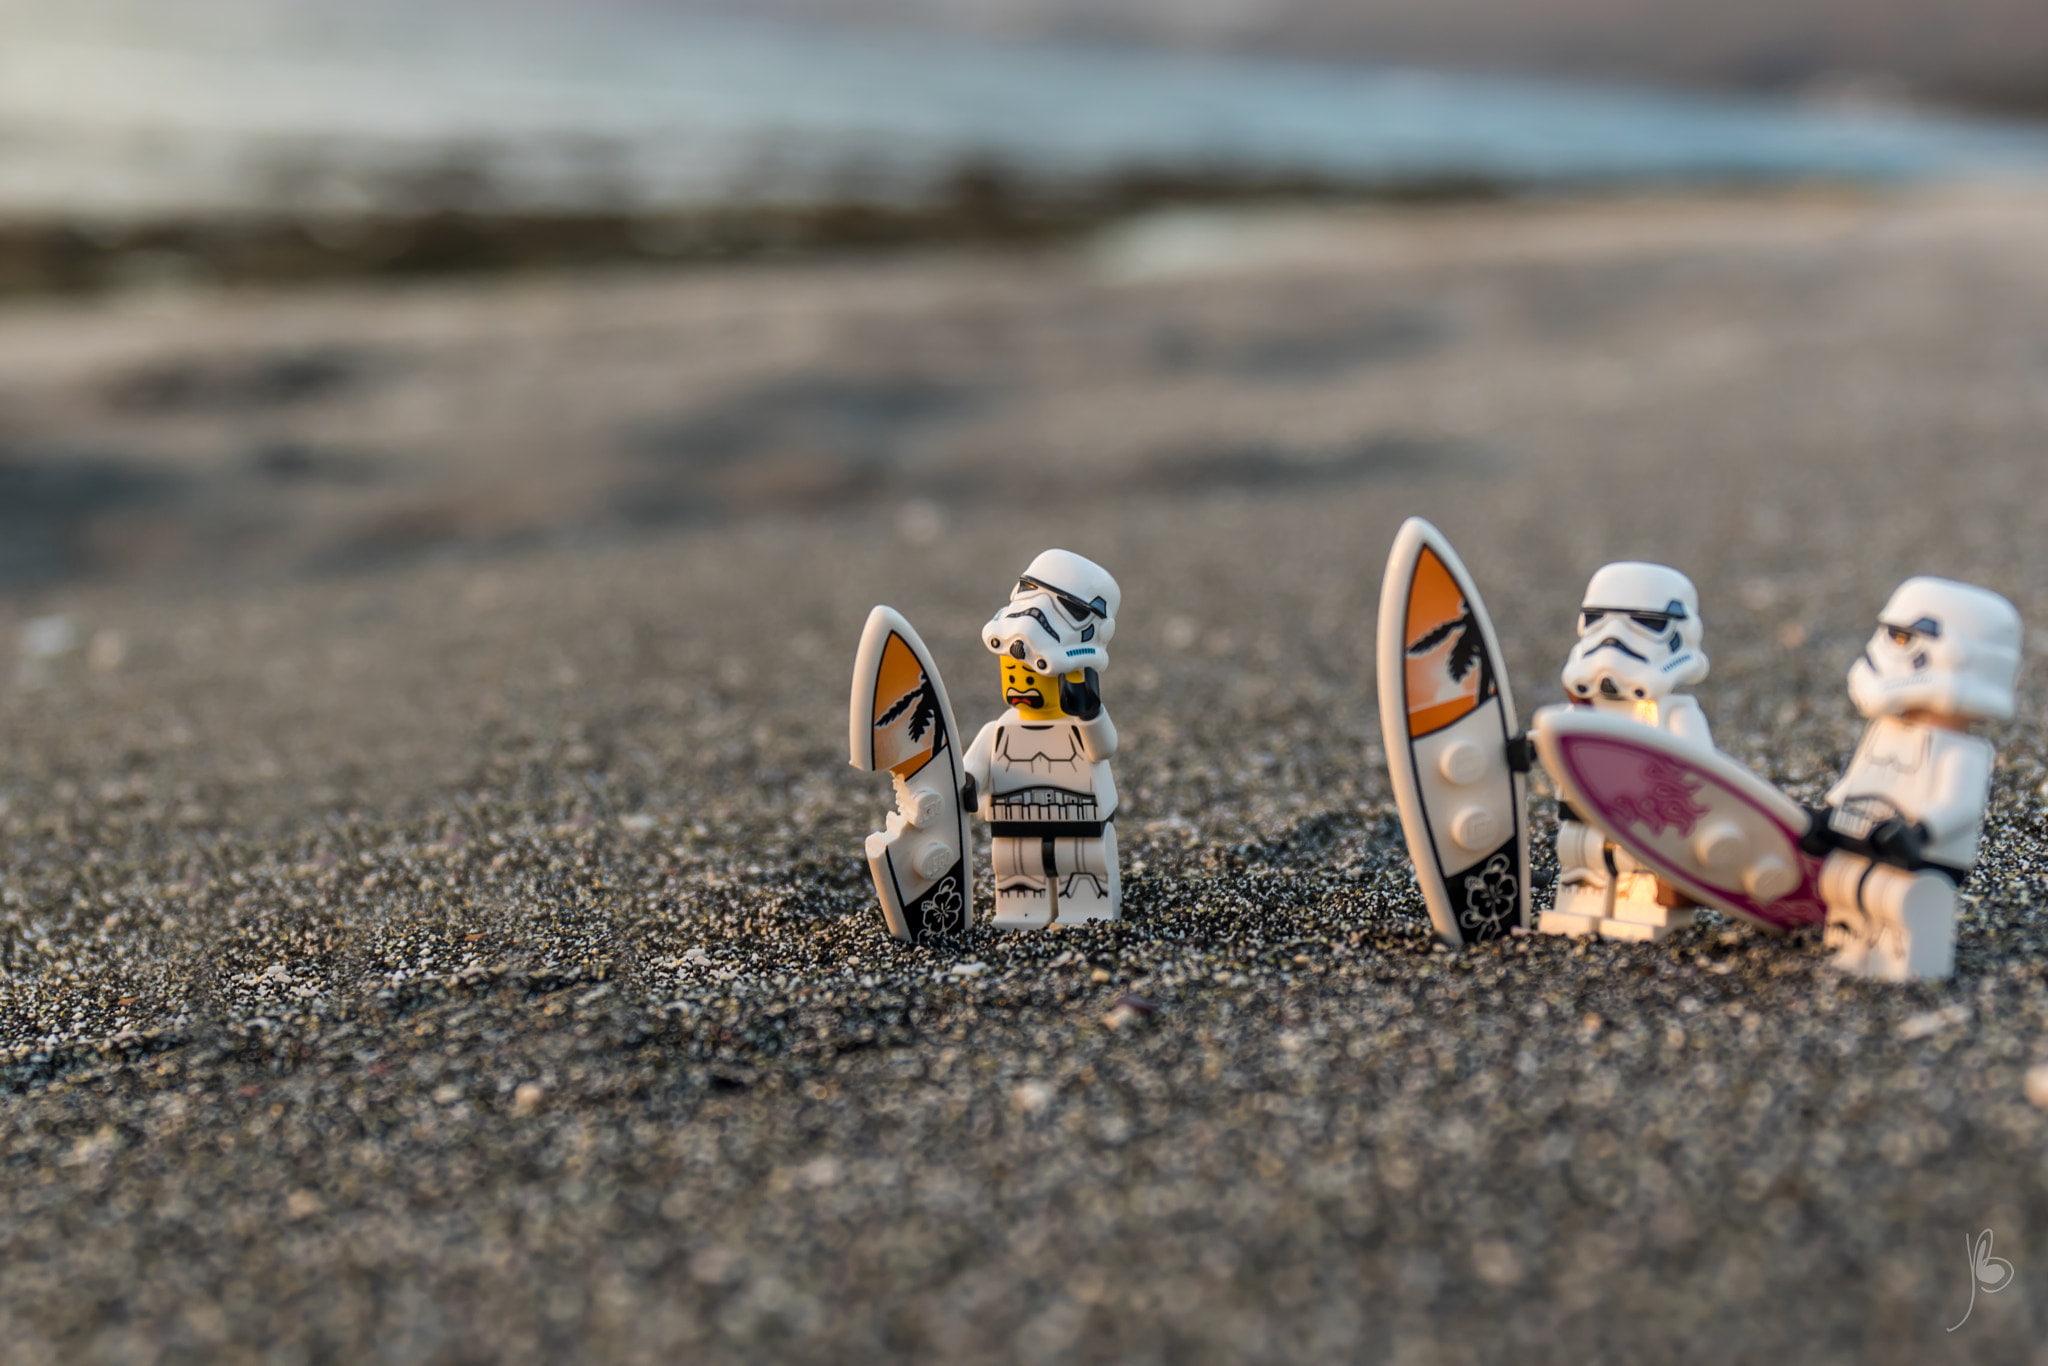 LEGO, Star Wars, humor, toys, sand, depth of field, gray, surfboards